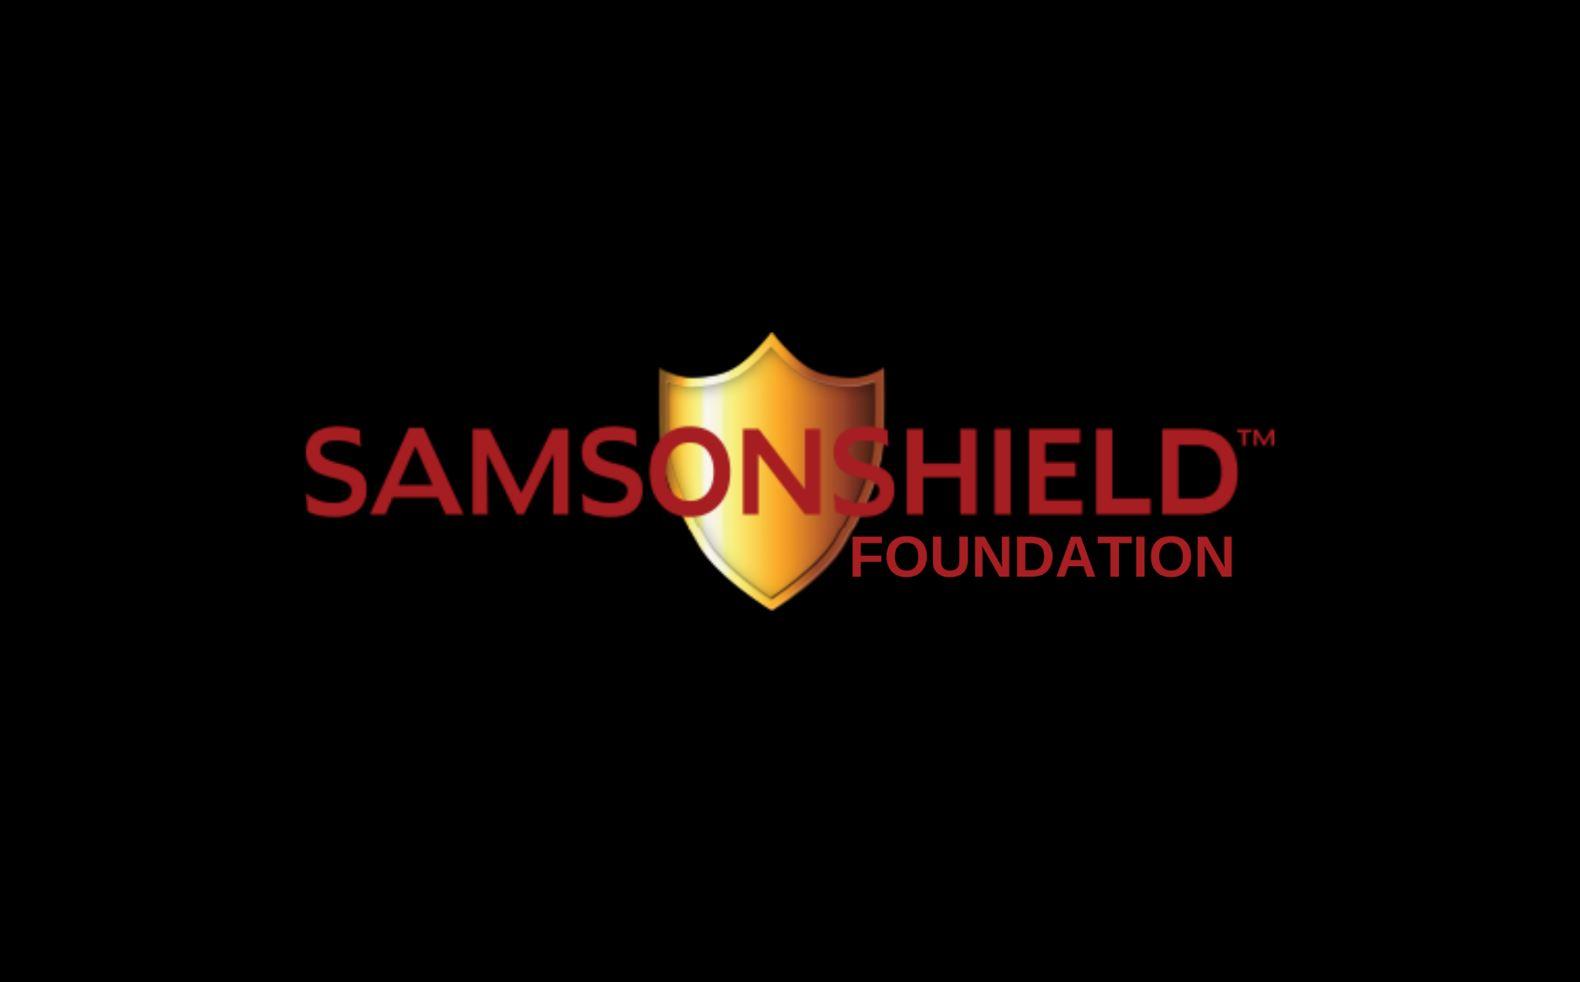 The Samsonshield Foundation